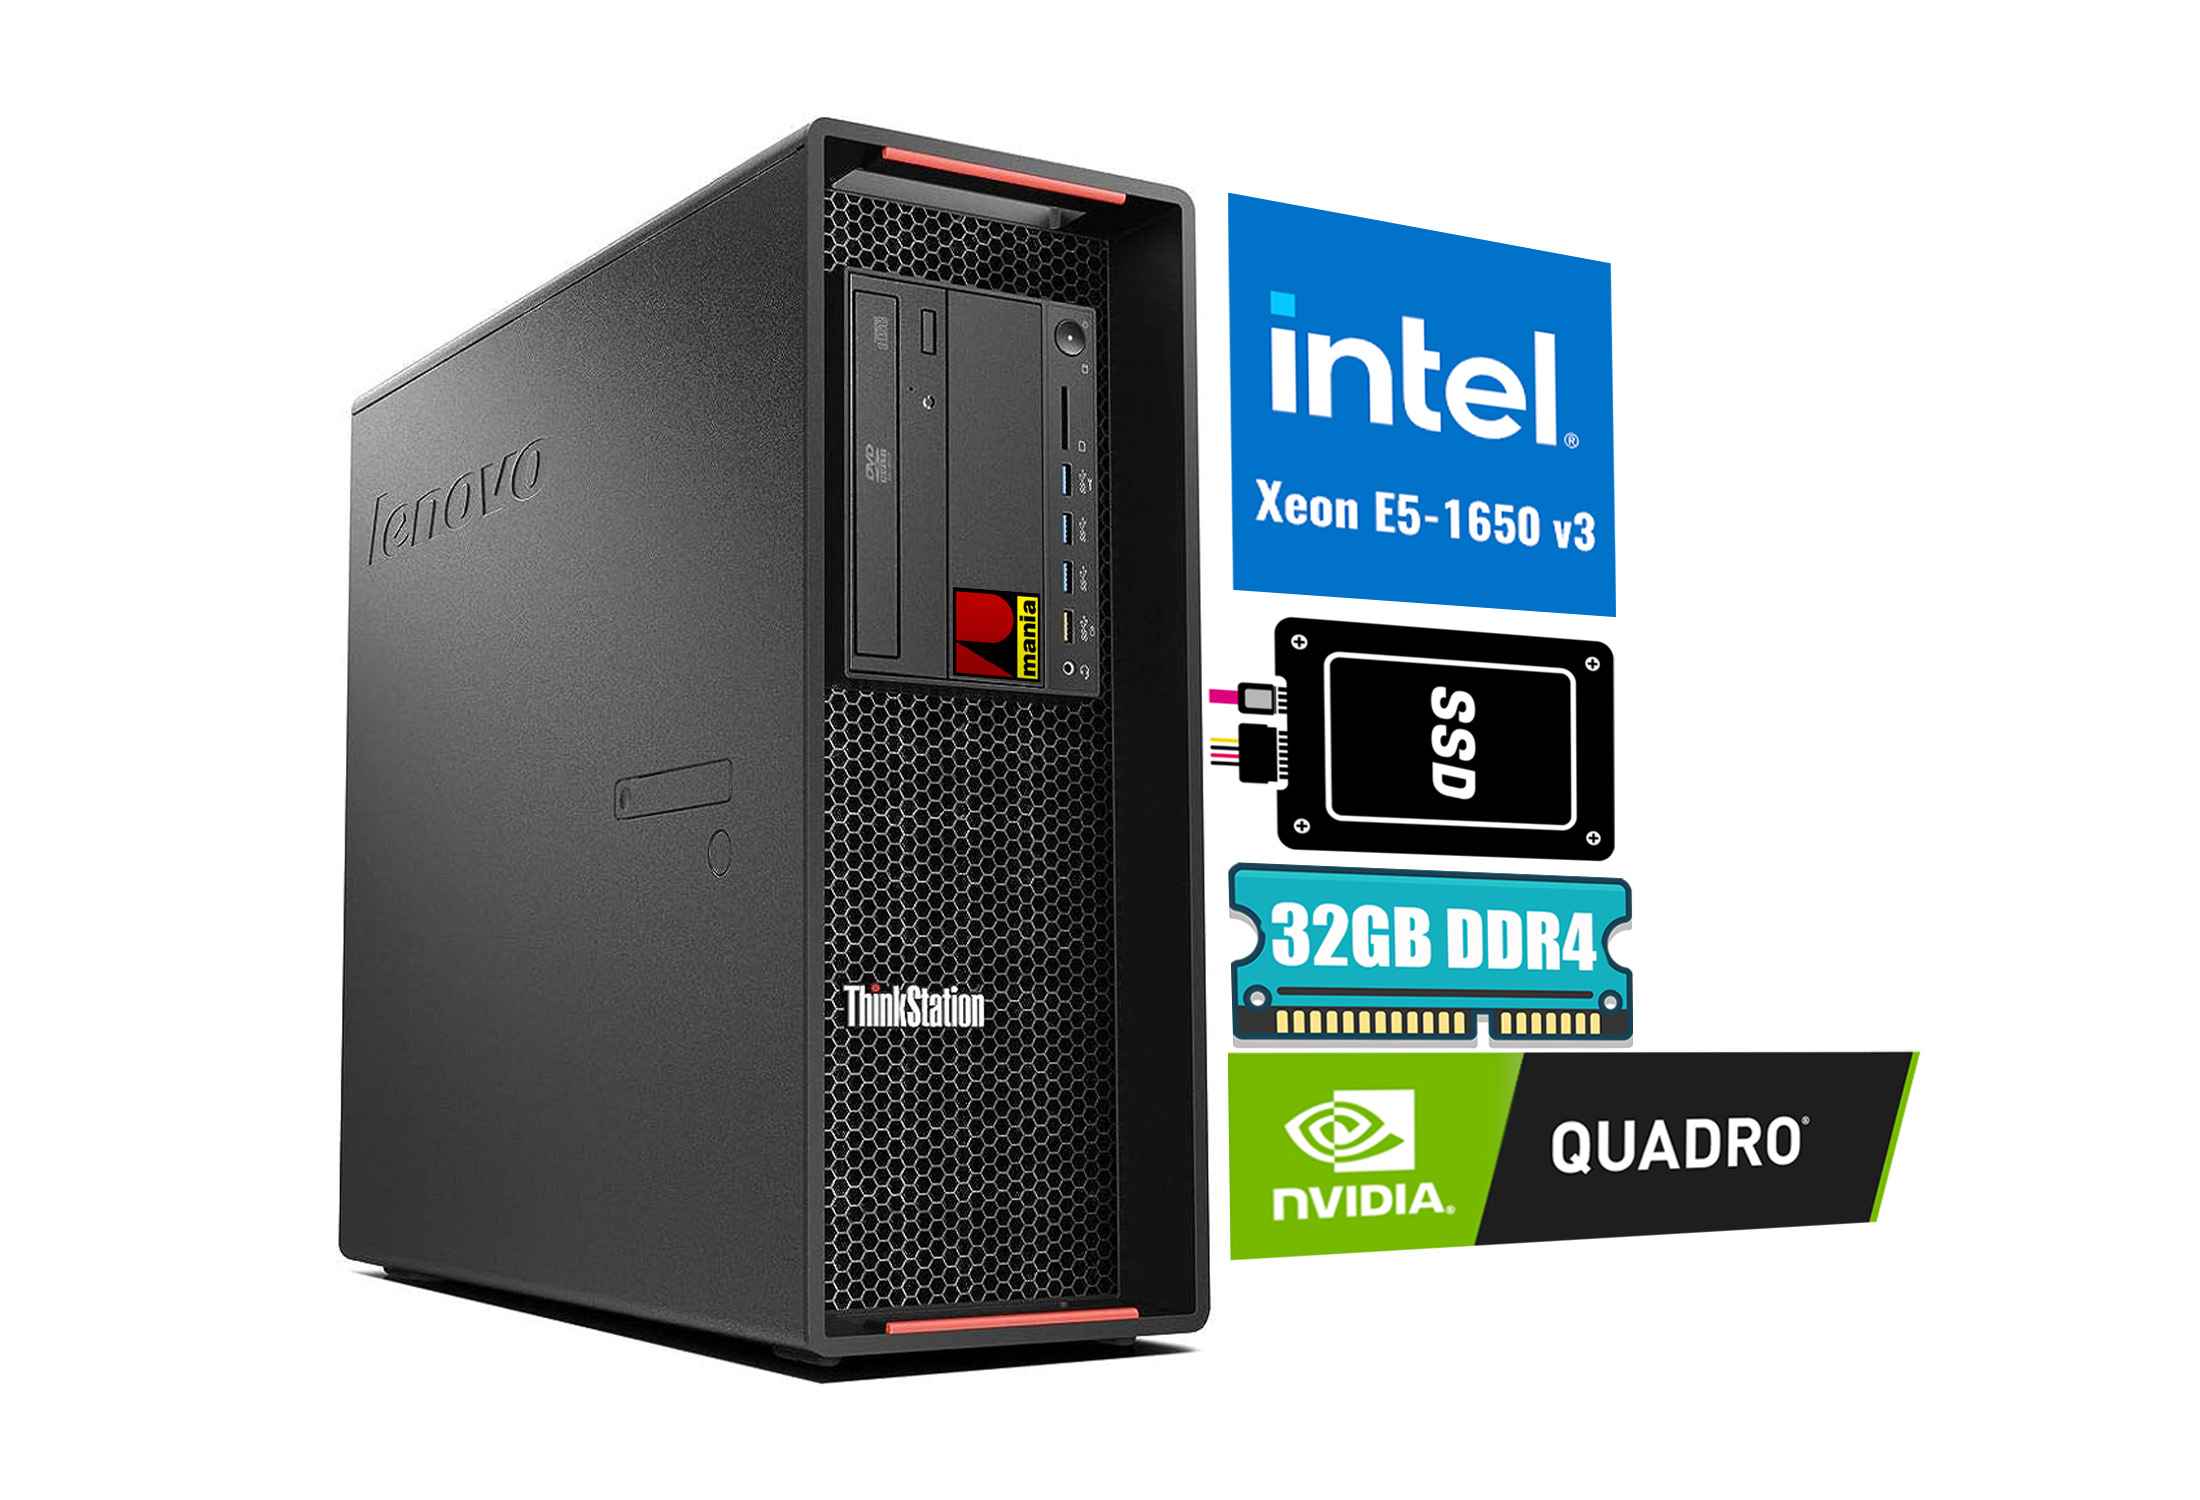 Lenovo Thinkstation P500  Xeon E5-1650v3  SSD Quadro  K2200-DPAIA.jpeg